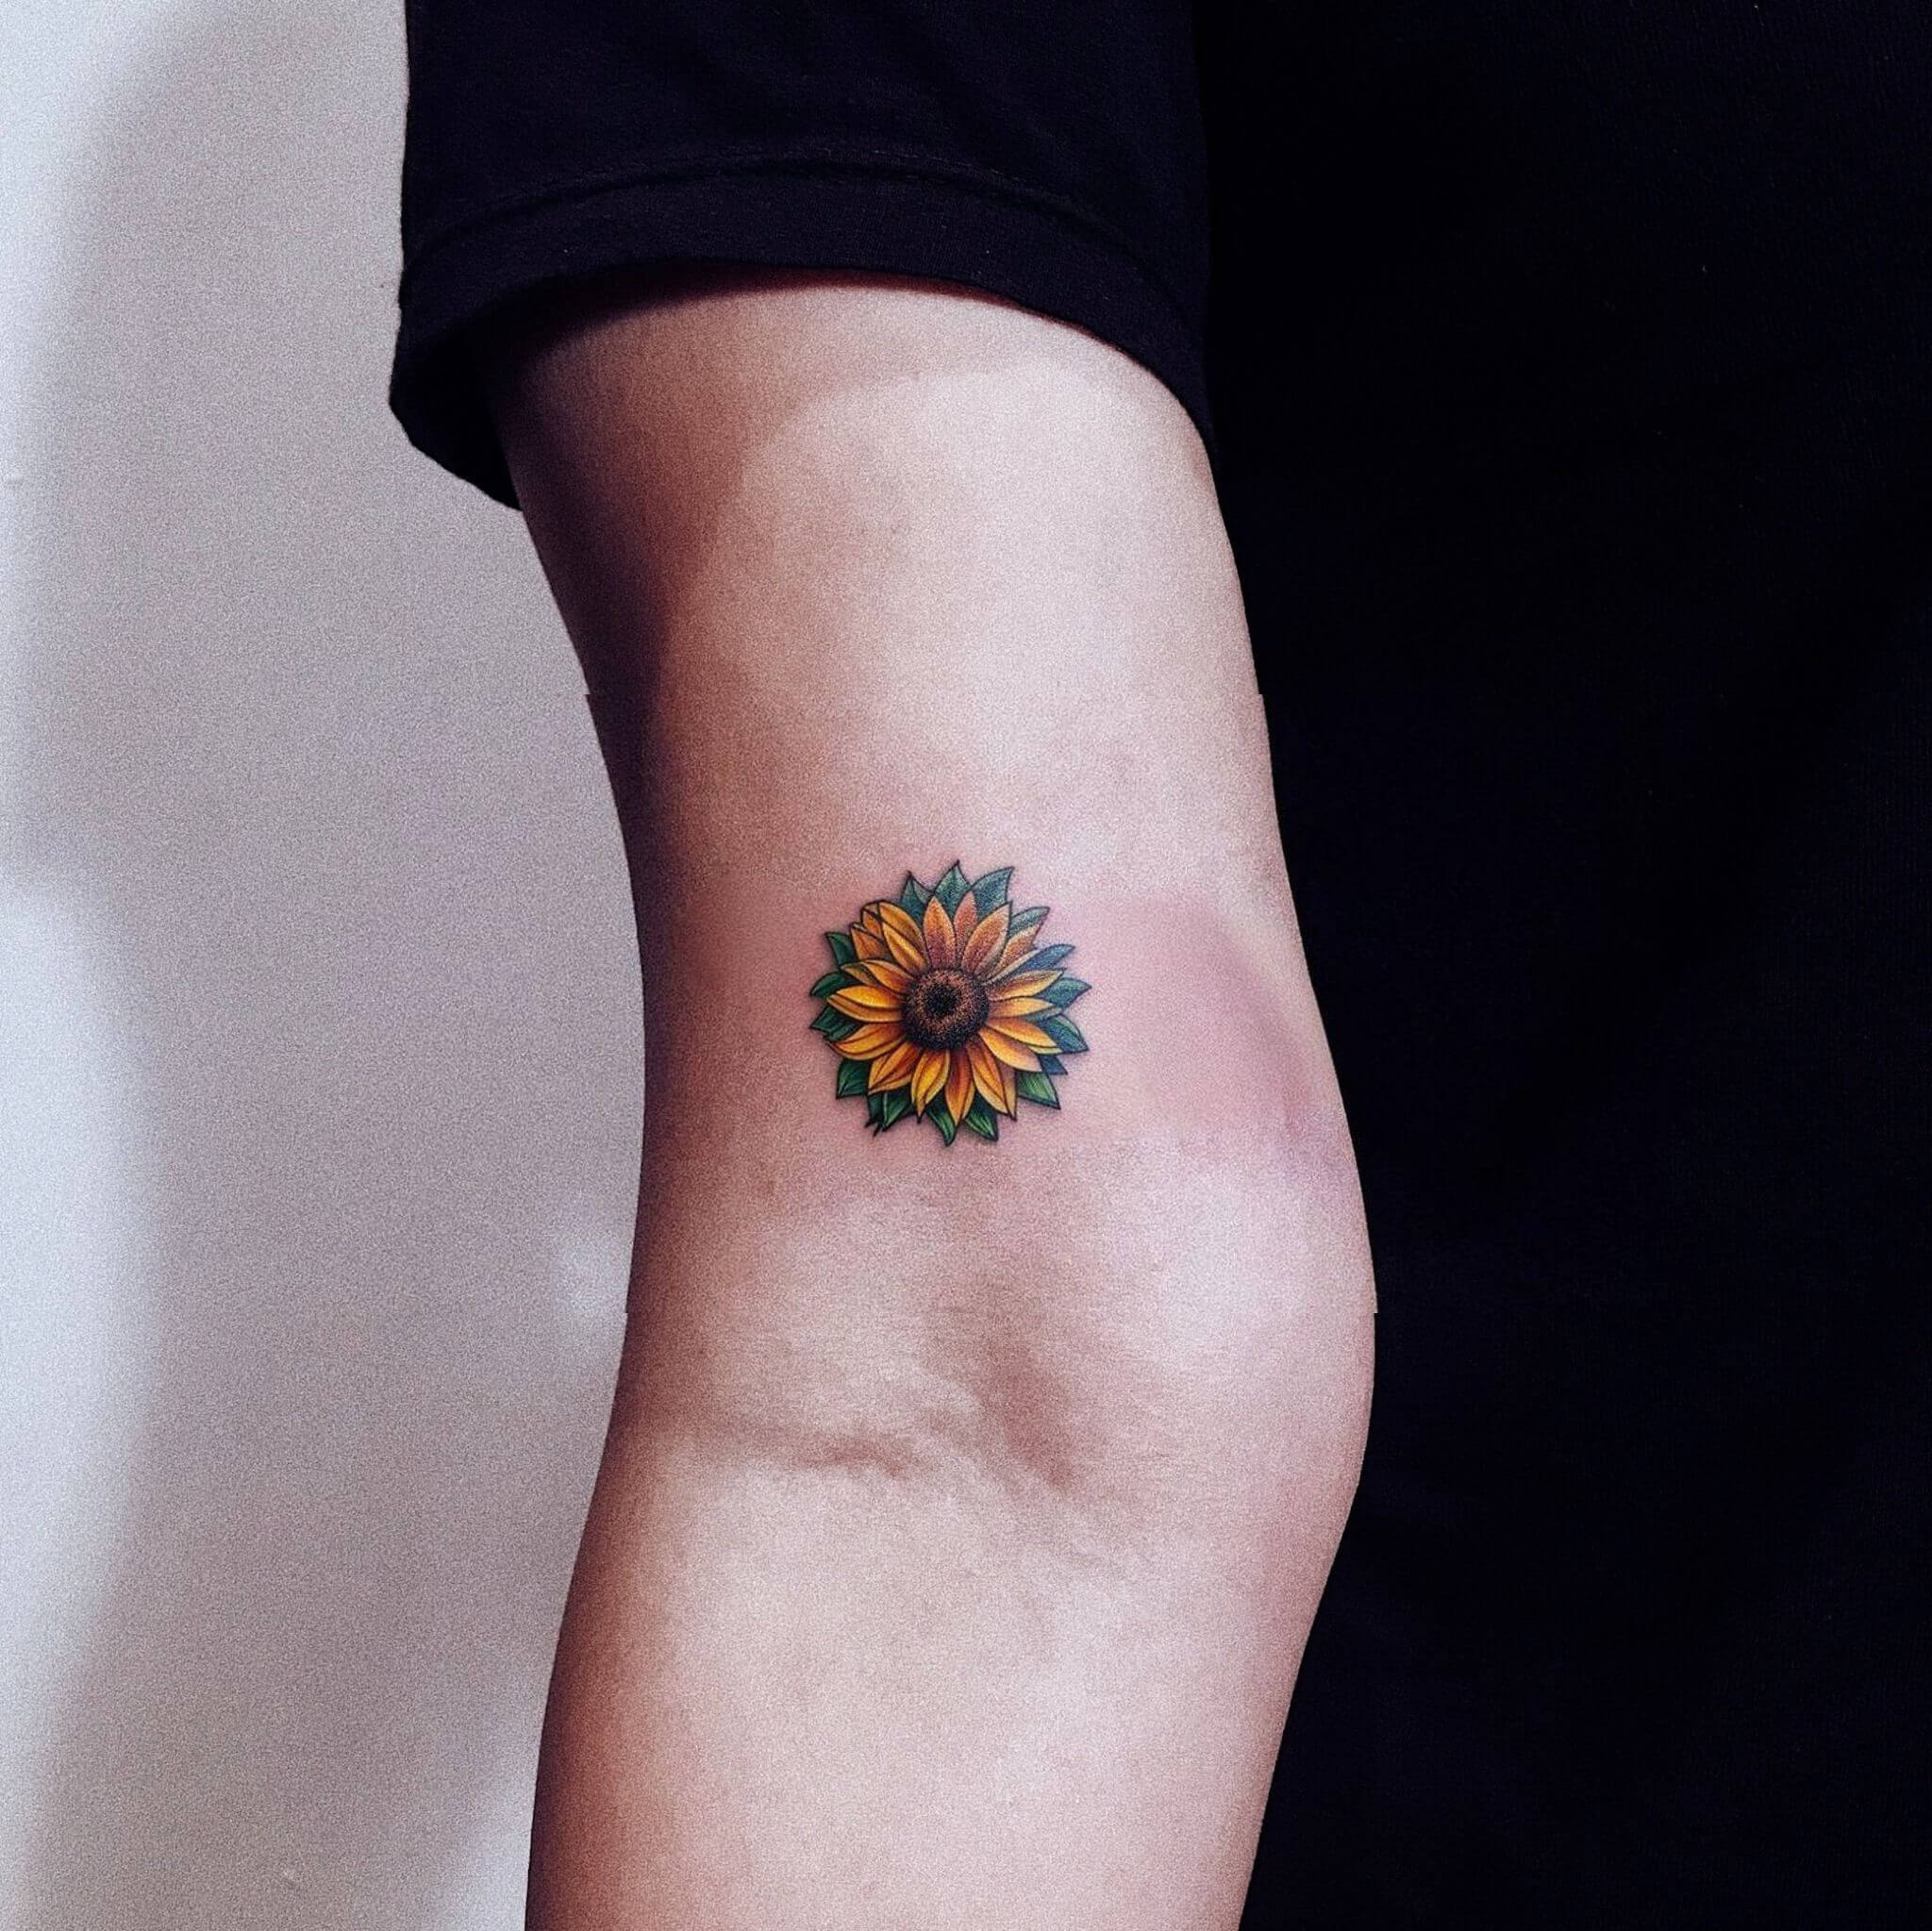 a sunflower tattoo on mans arm